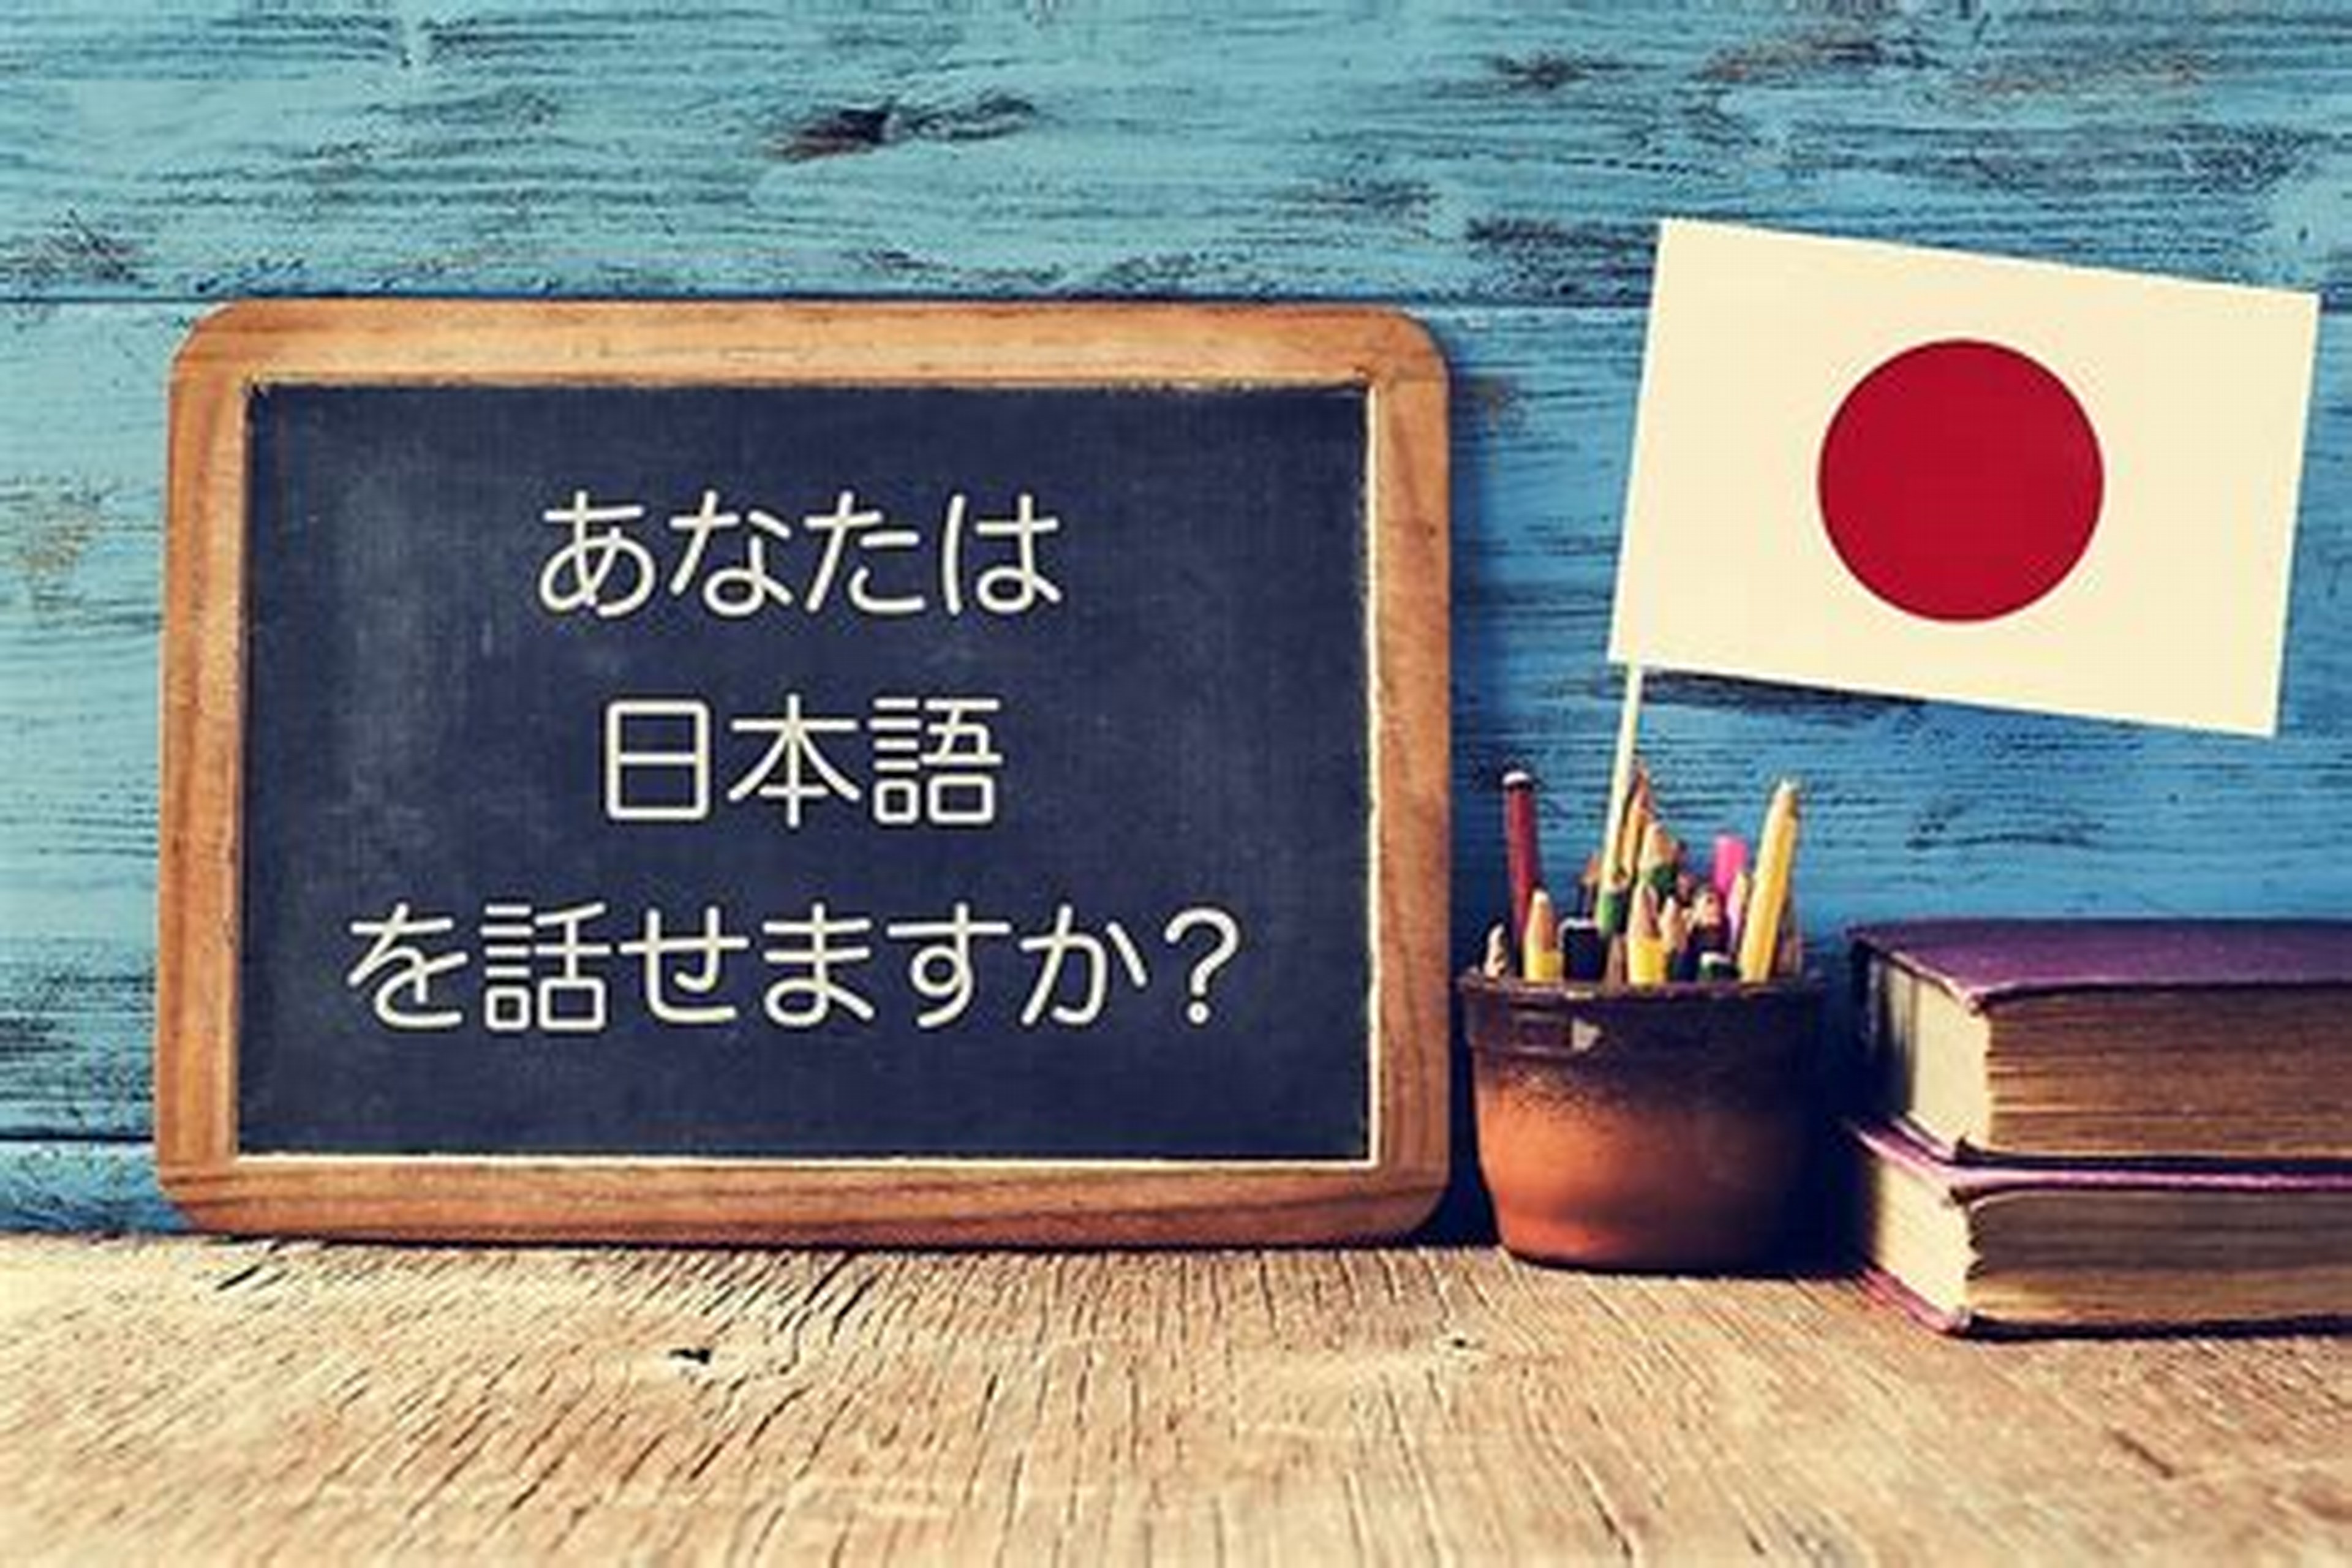 Learning Language Japan